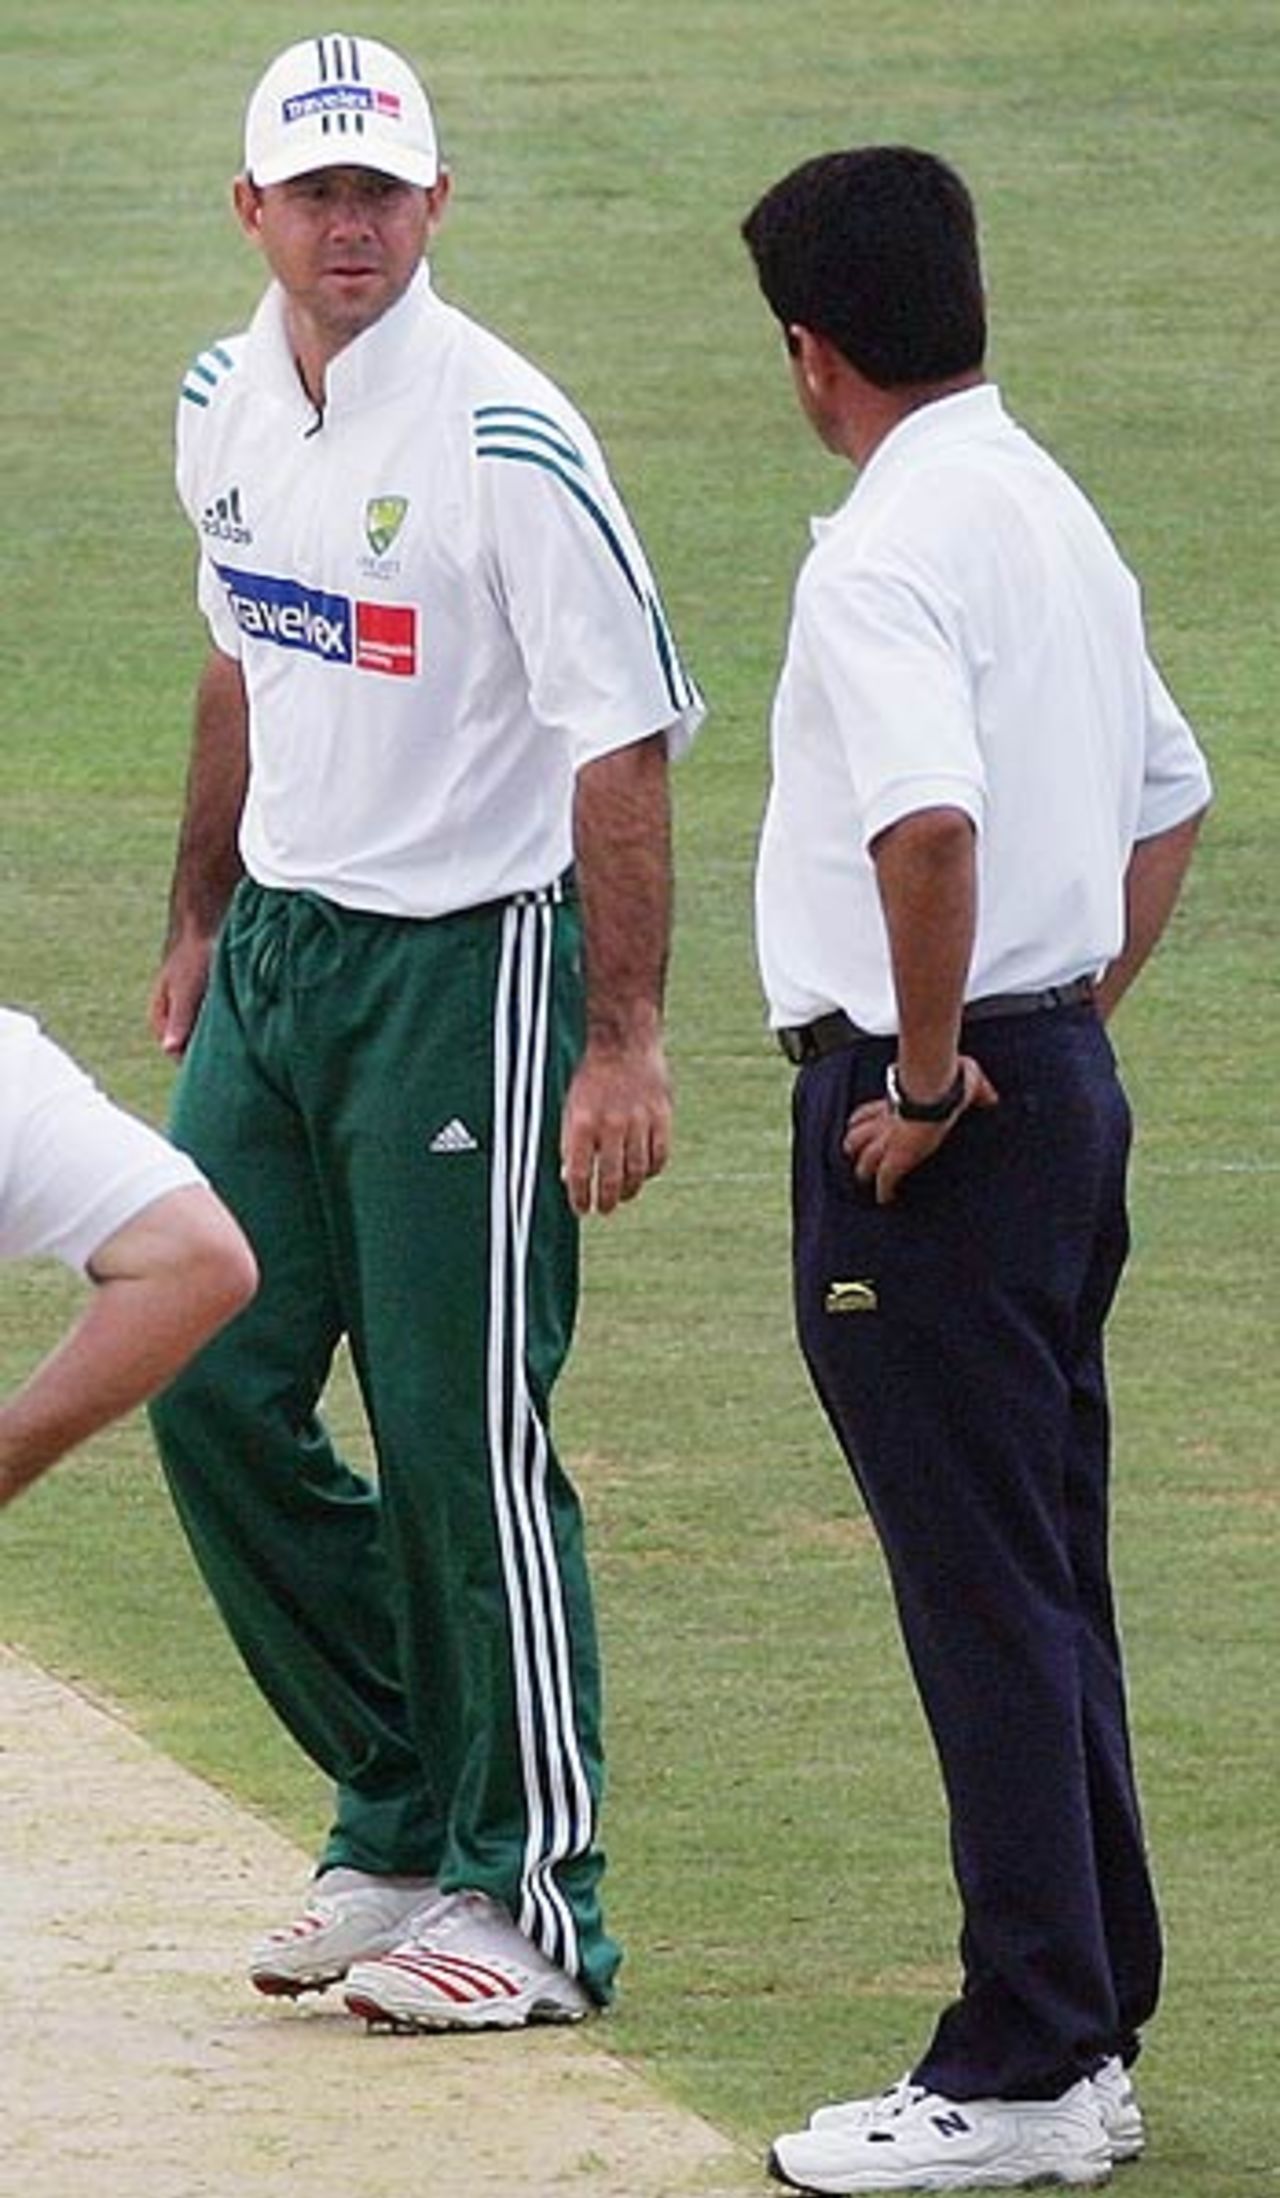 Ricky Ponting speaks to Aleem Dar before the start of play, Bangladesh v Australia, 2nd Test, Chittagong, 3rd day, April 18, 2006